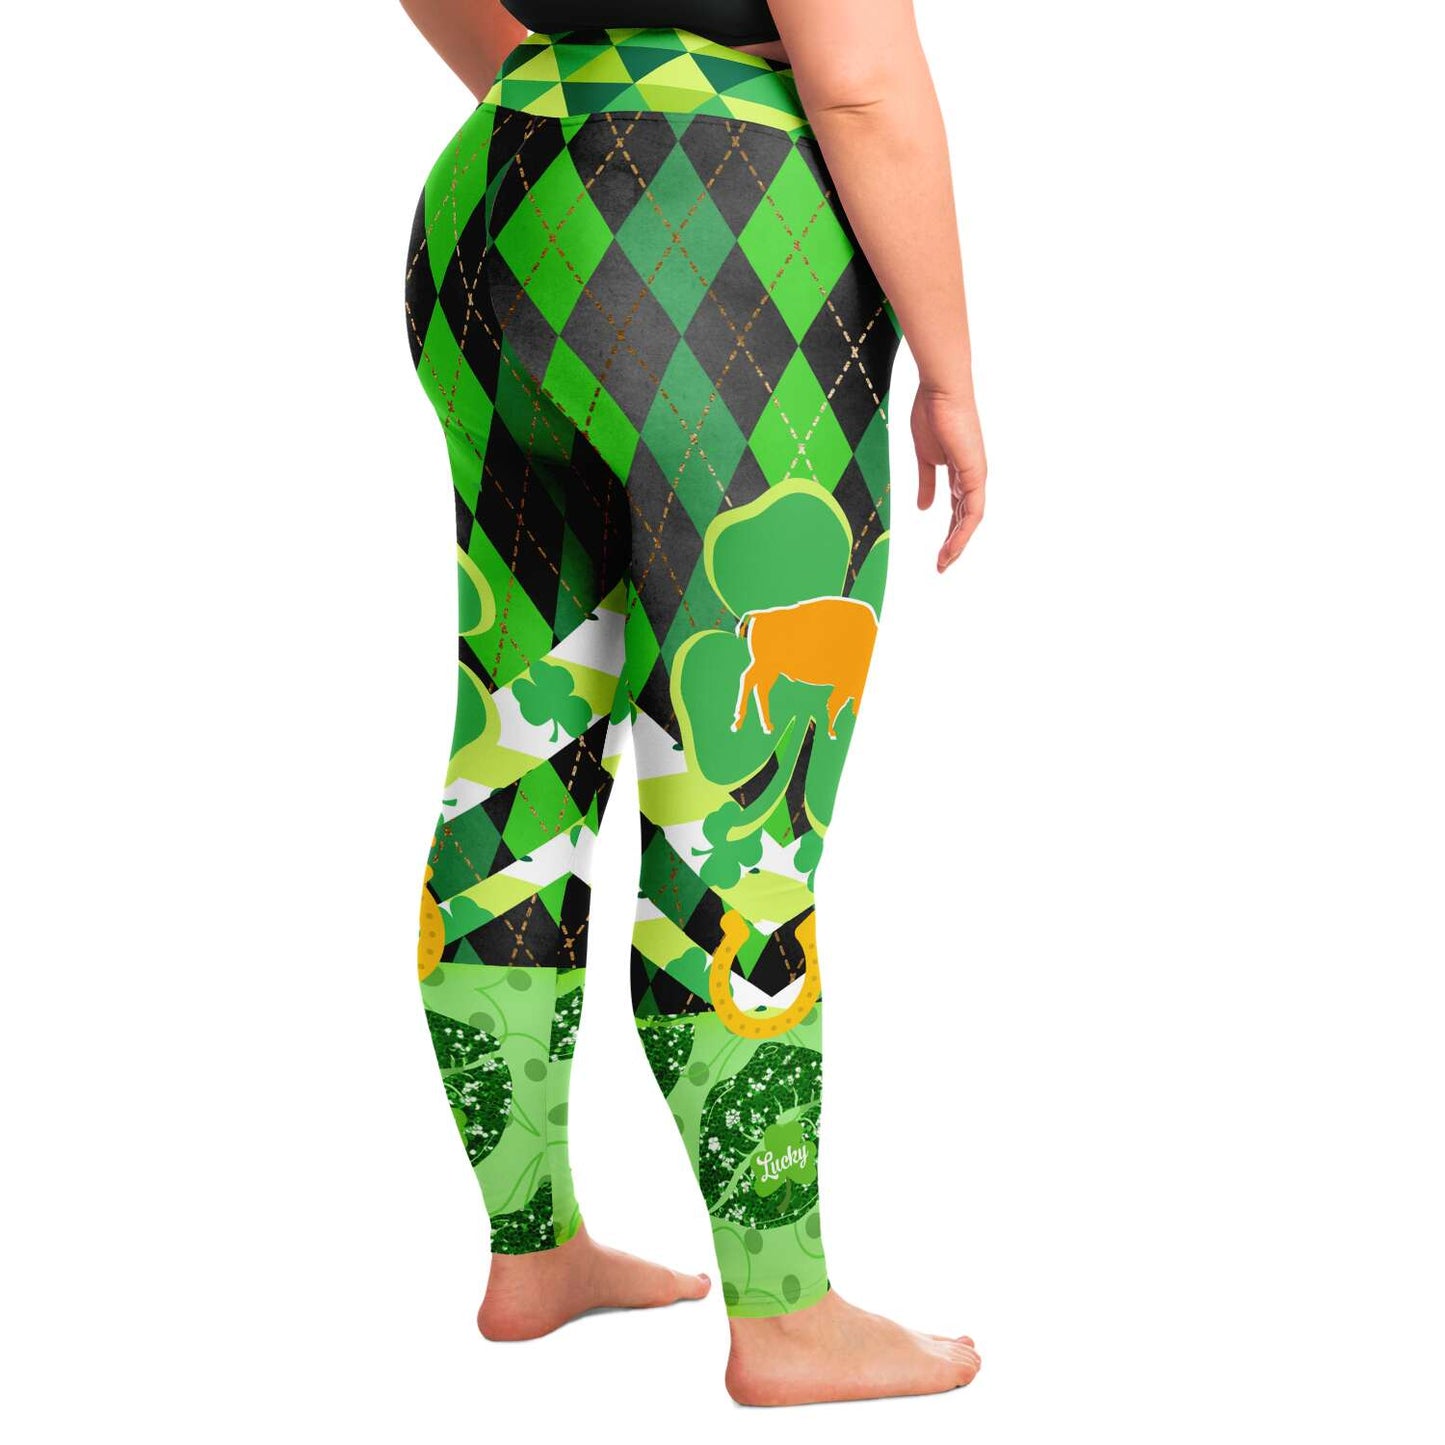 Curvy St Patricks Day Yoga pants Plus size 2XL -6XL